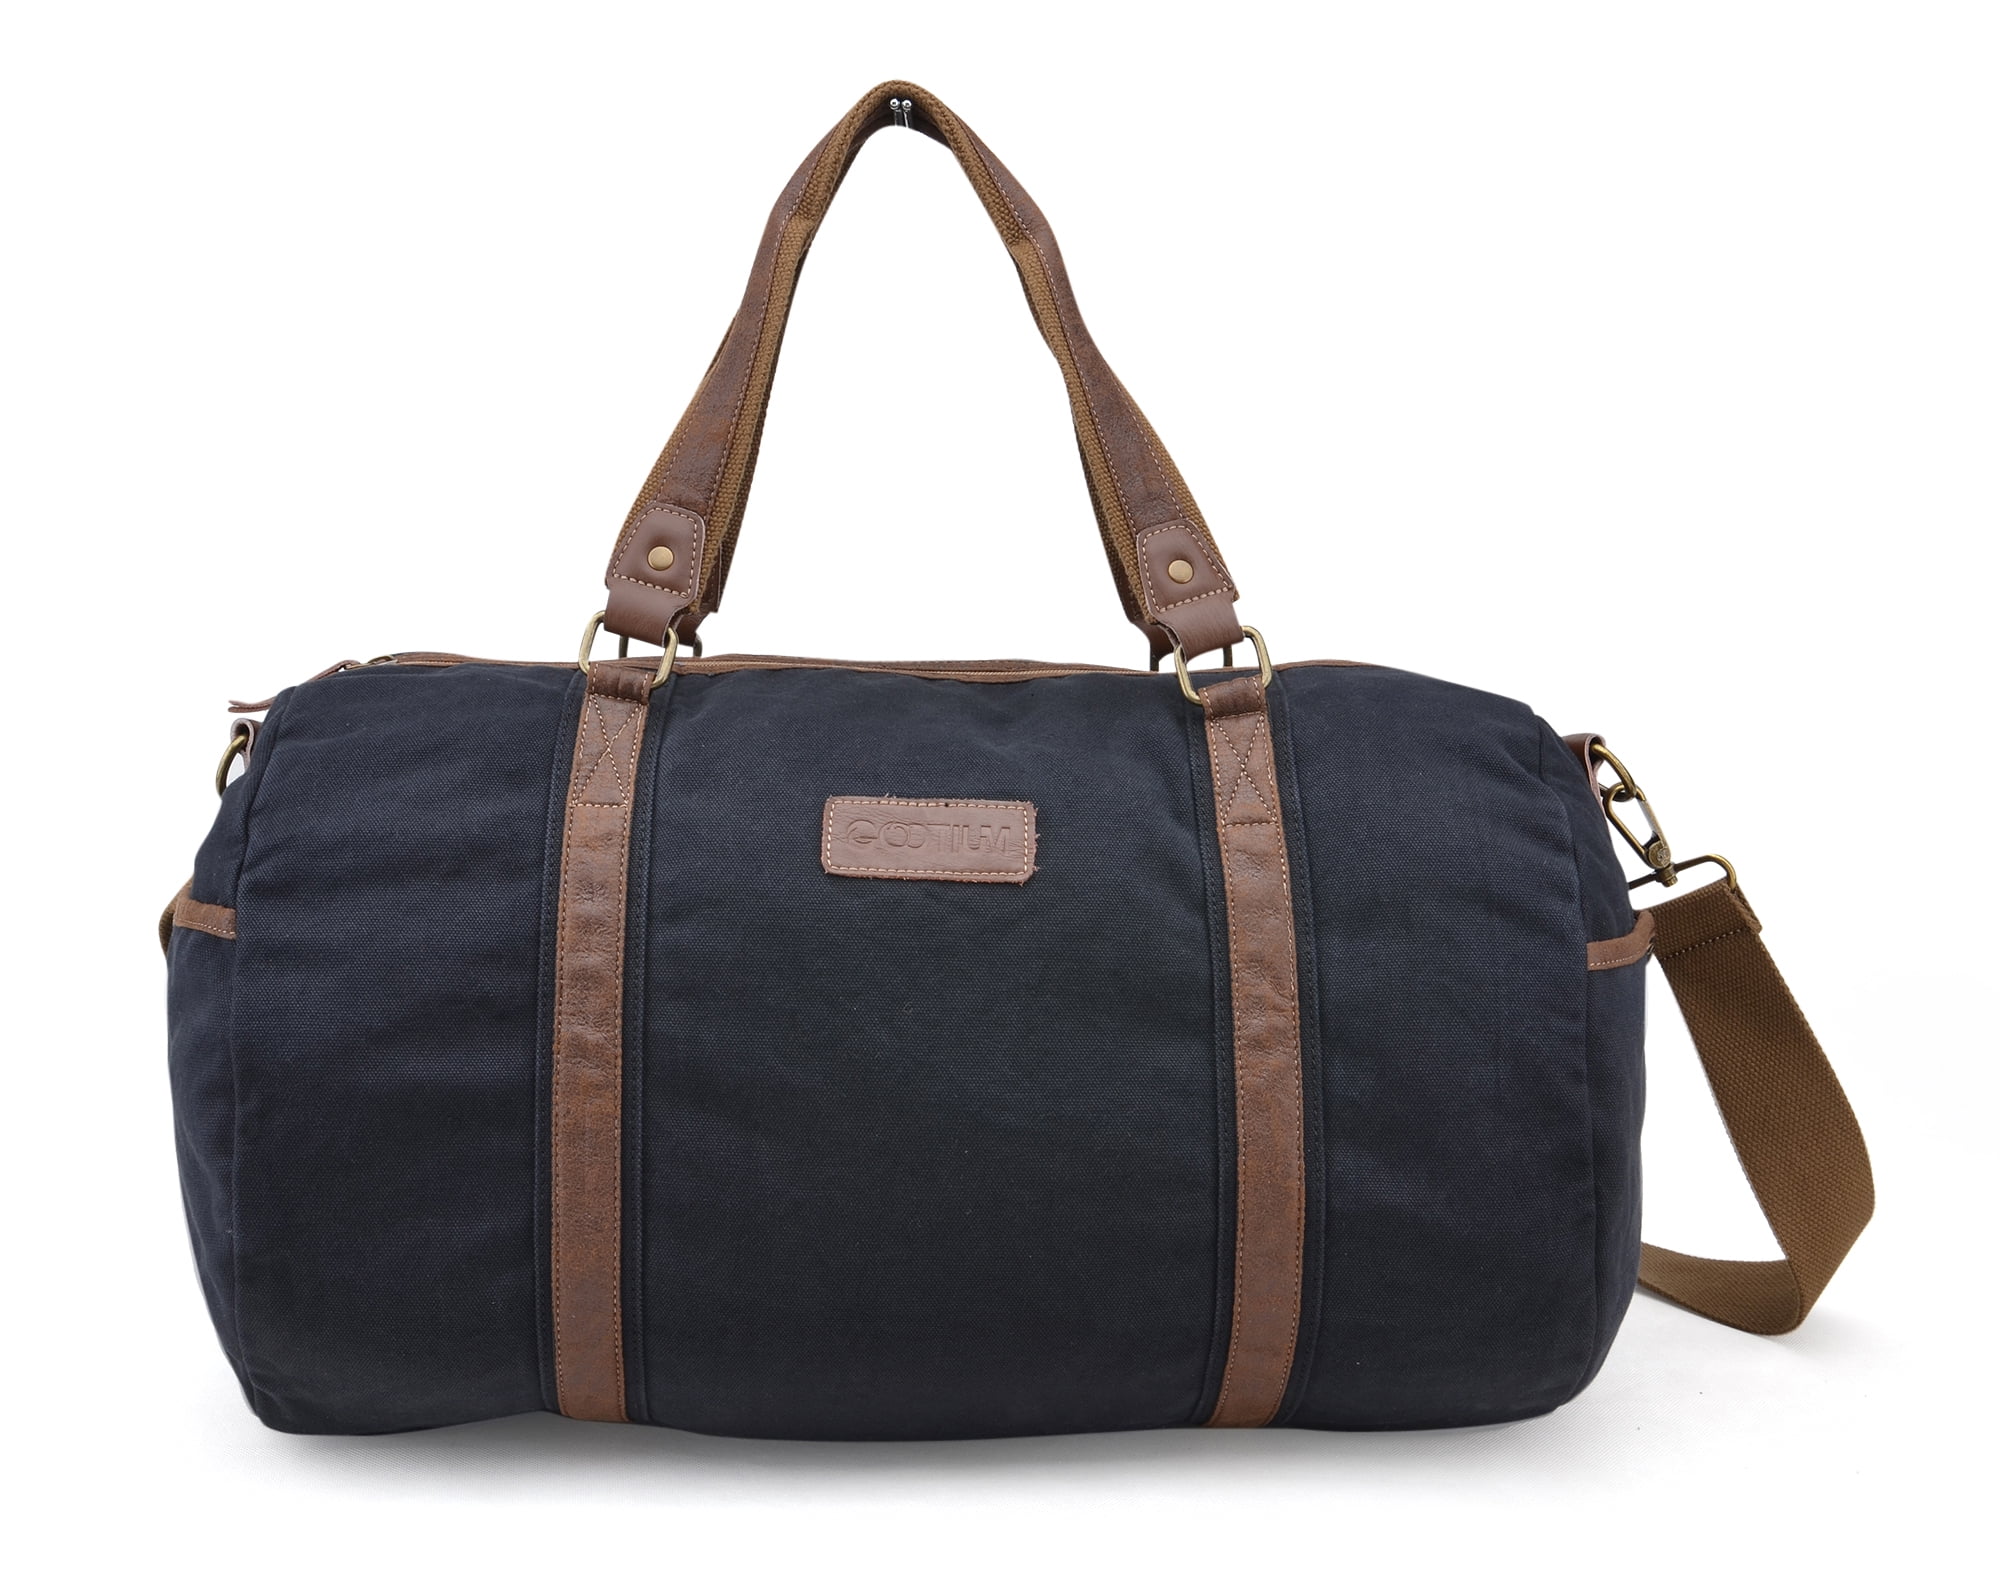 Gootium Vintage Canvas Duffel Bag Travel Tote Shoulder Gym Bag Weekend Bag, Black Large ...